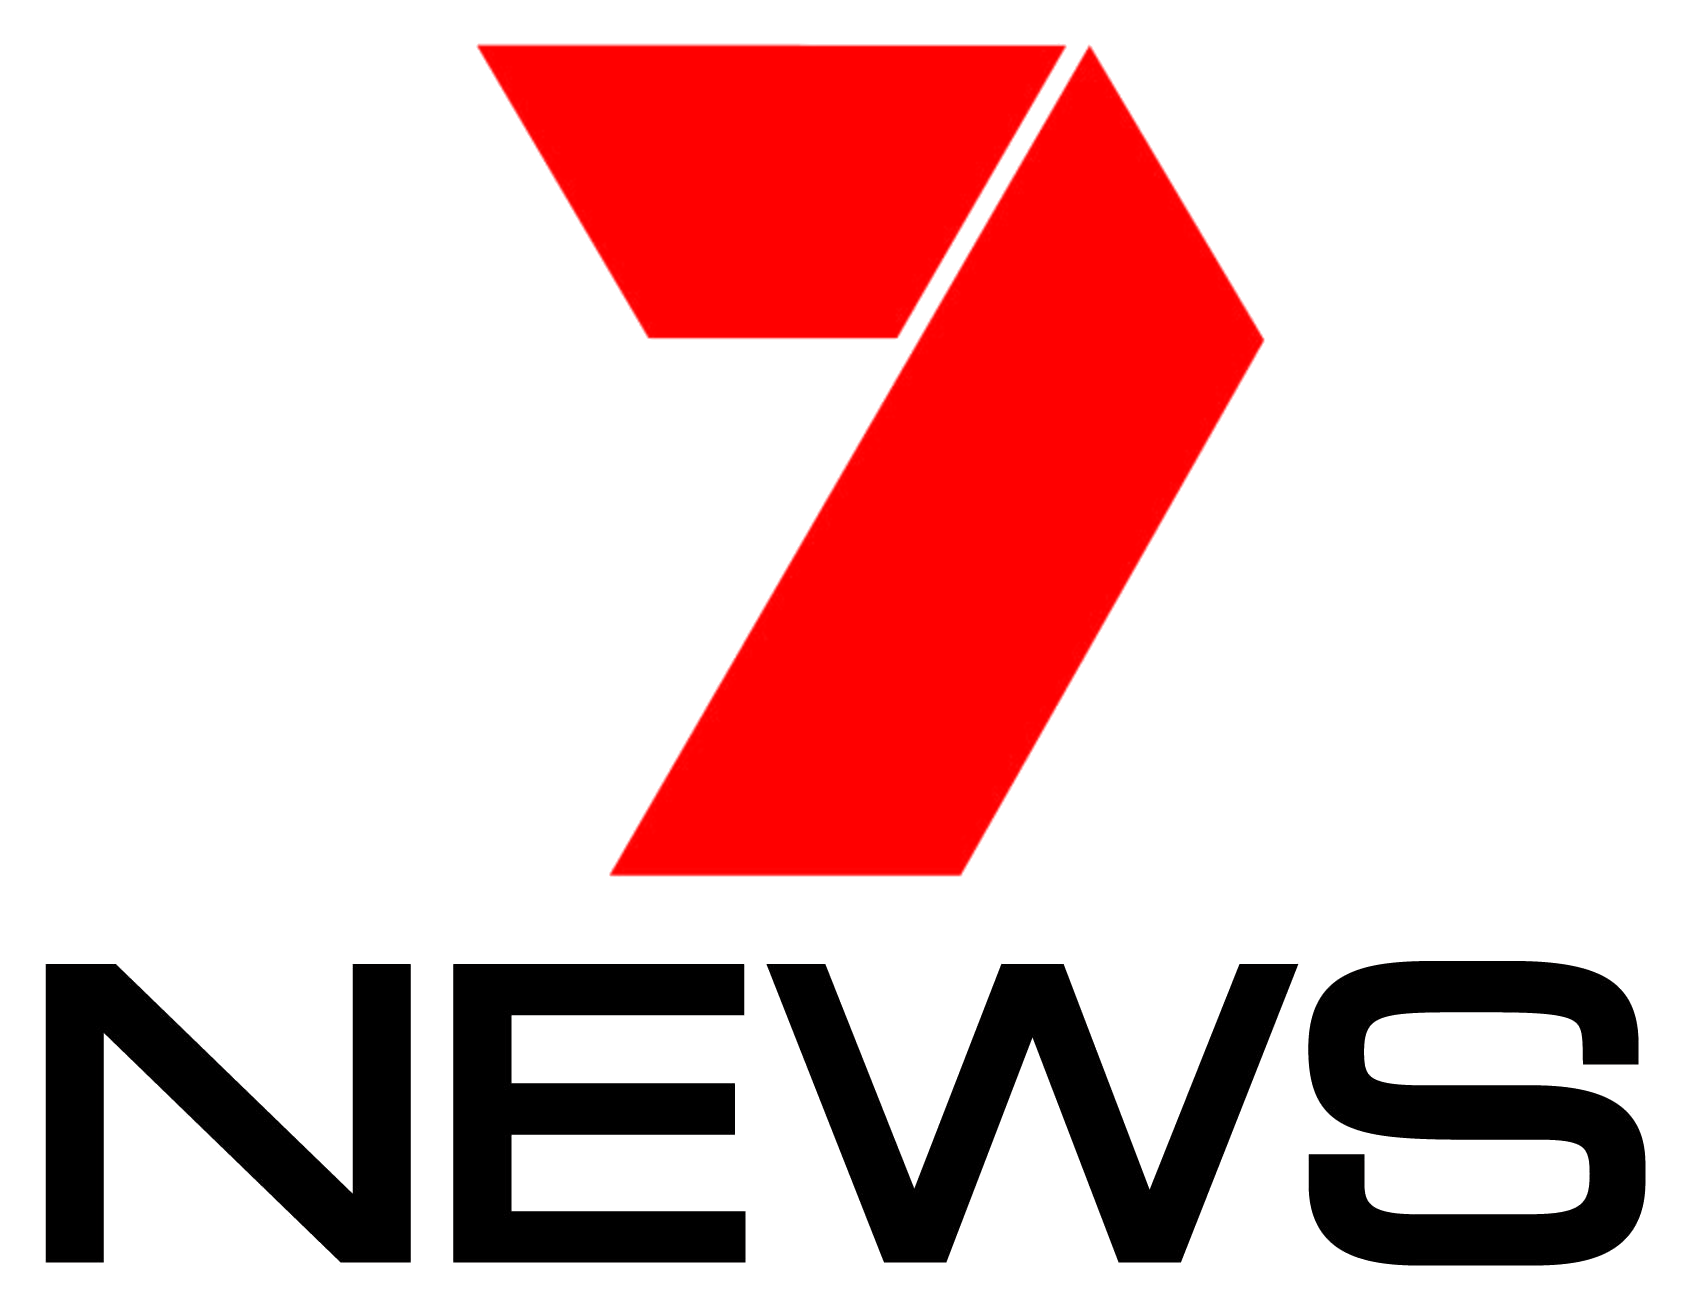 7NEWS logo